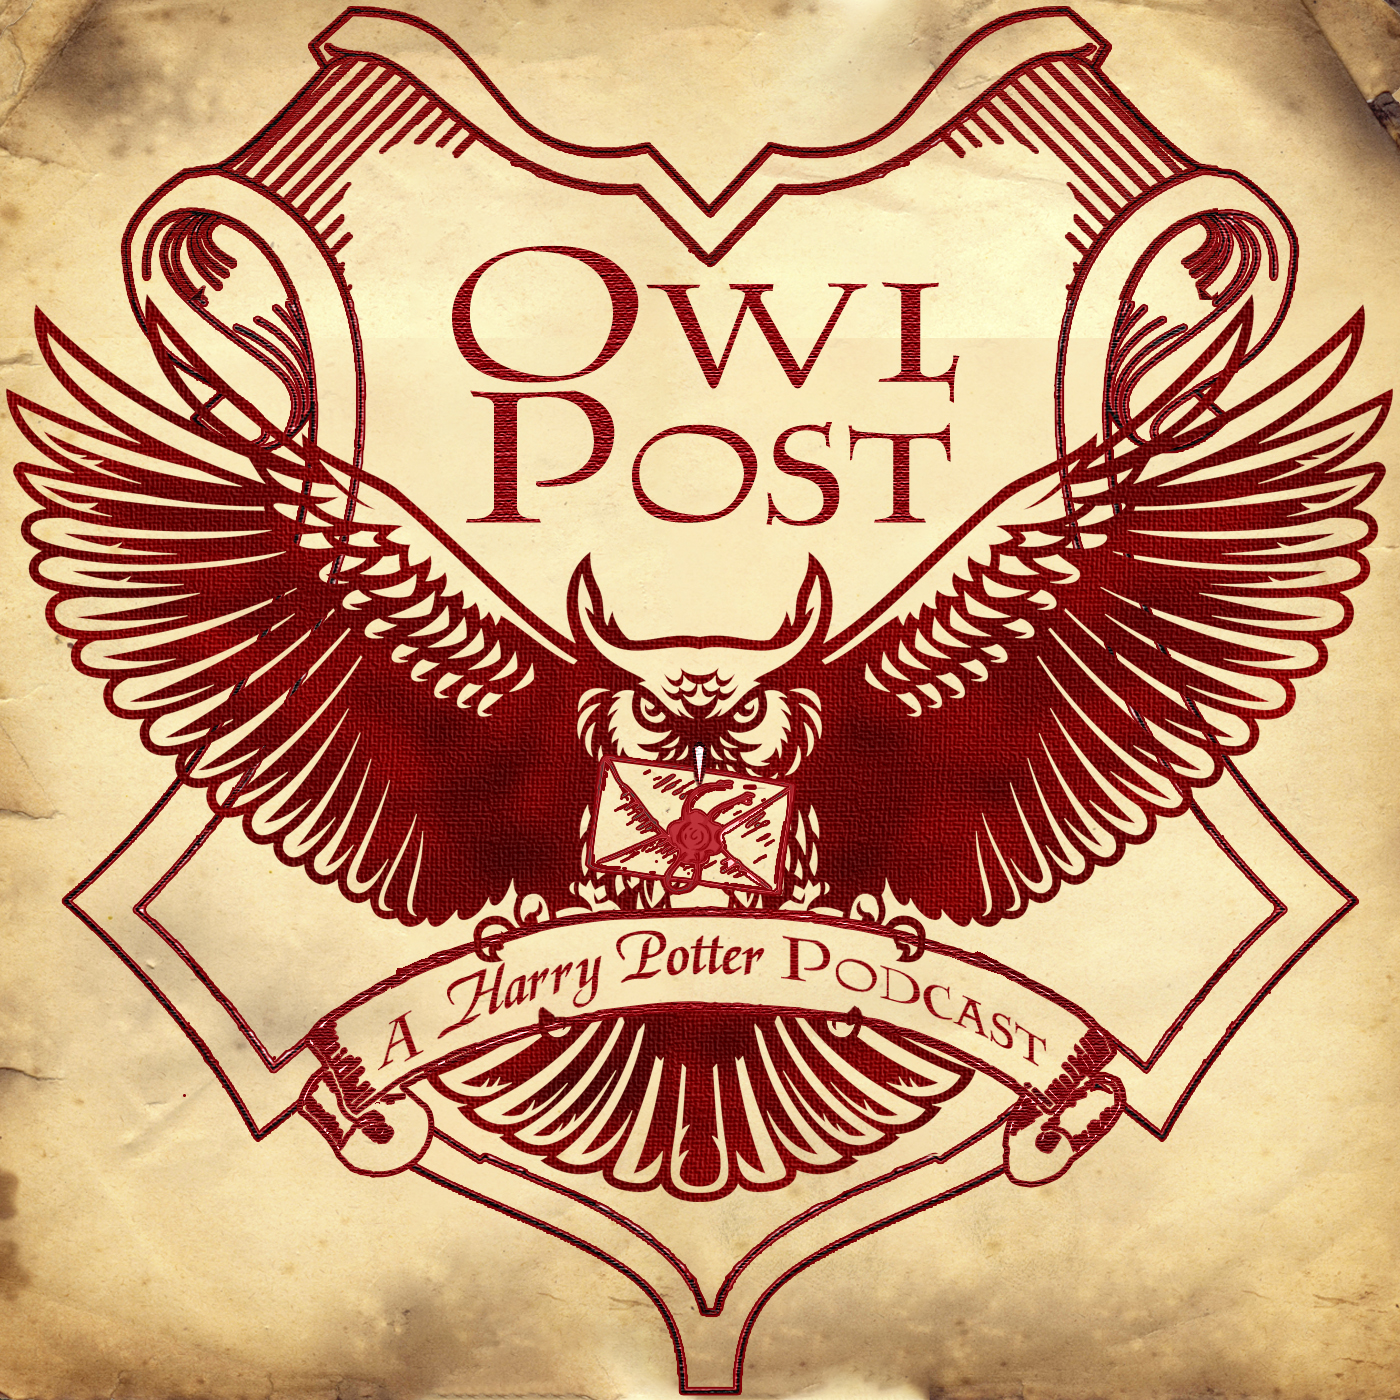 Harry Potter Owl Post Logo